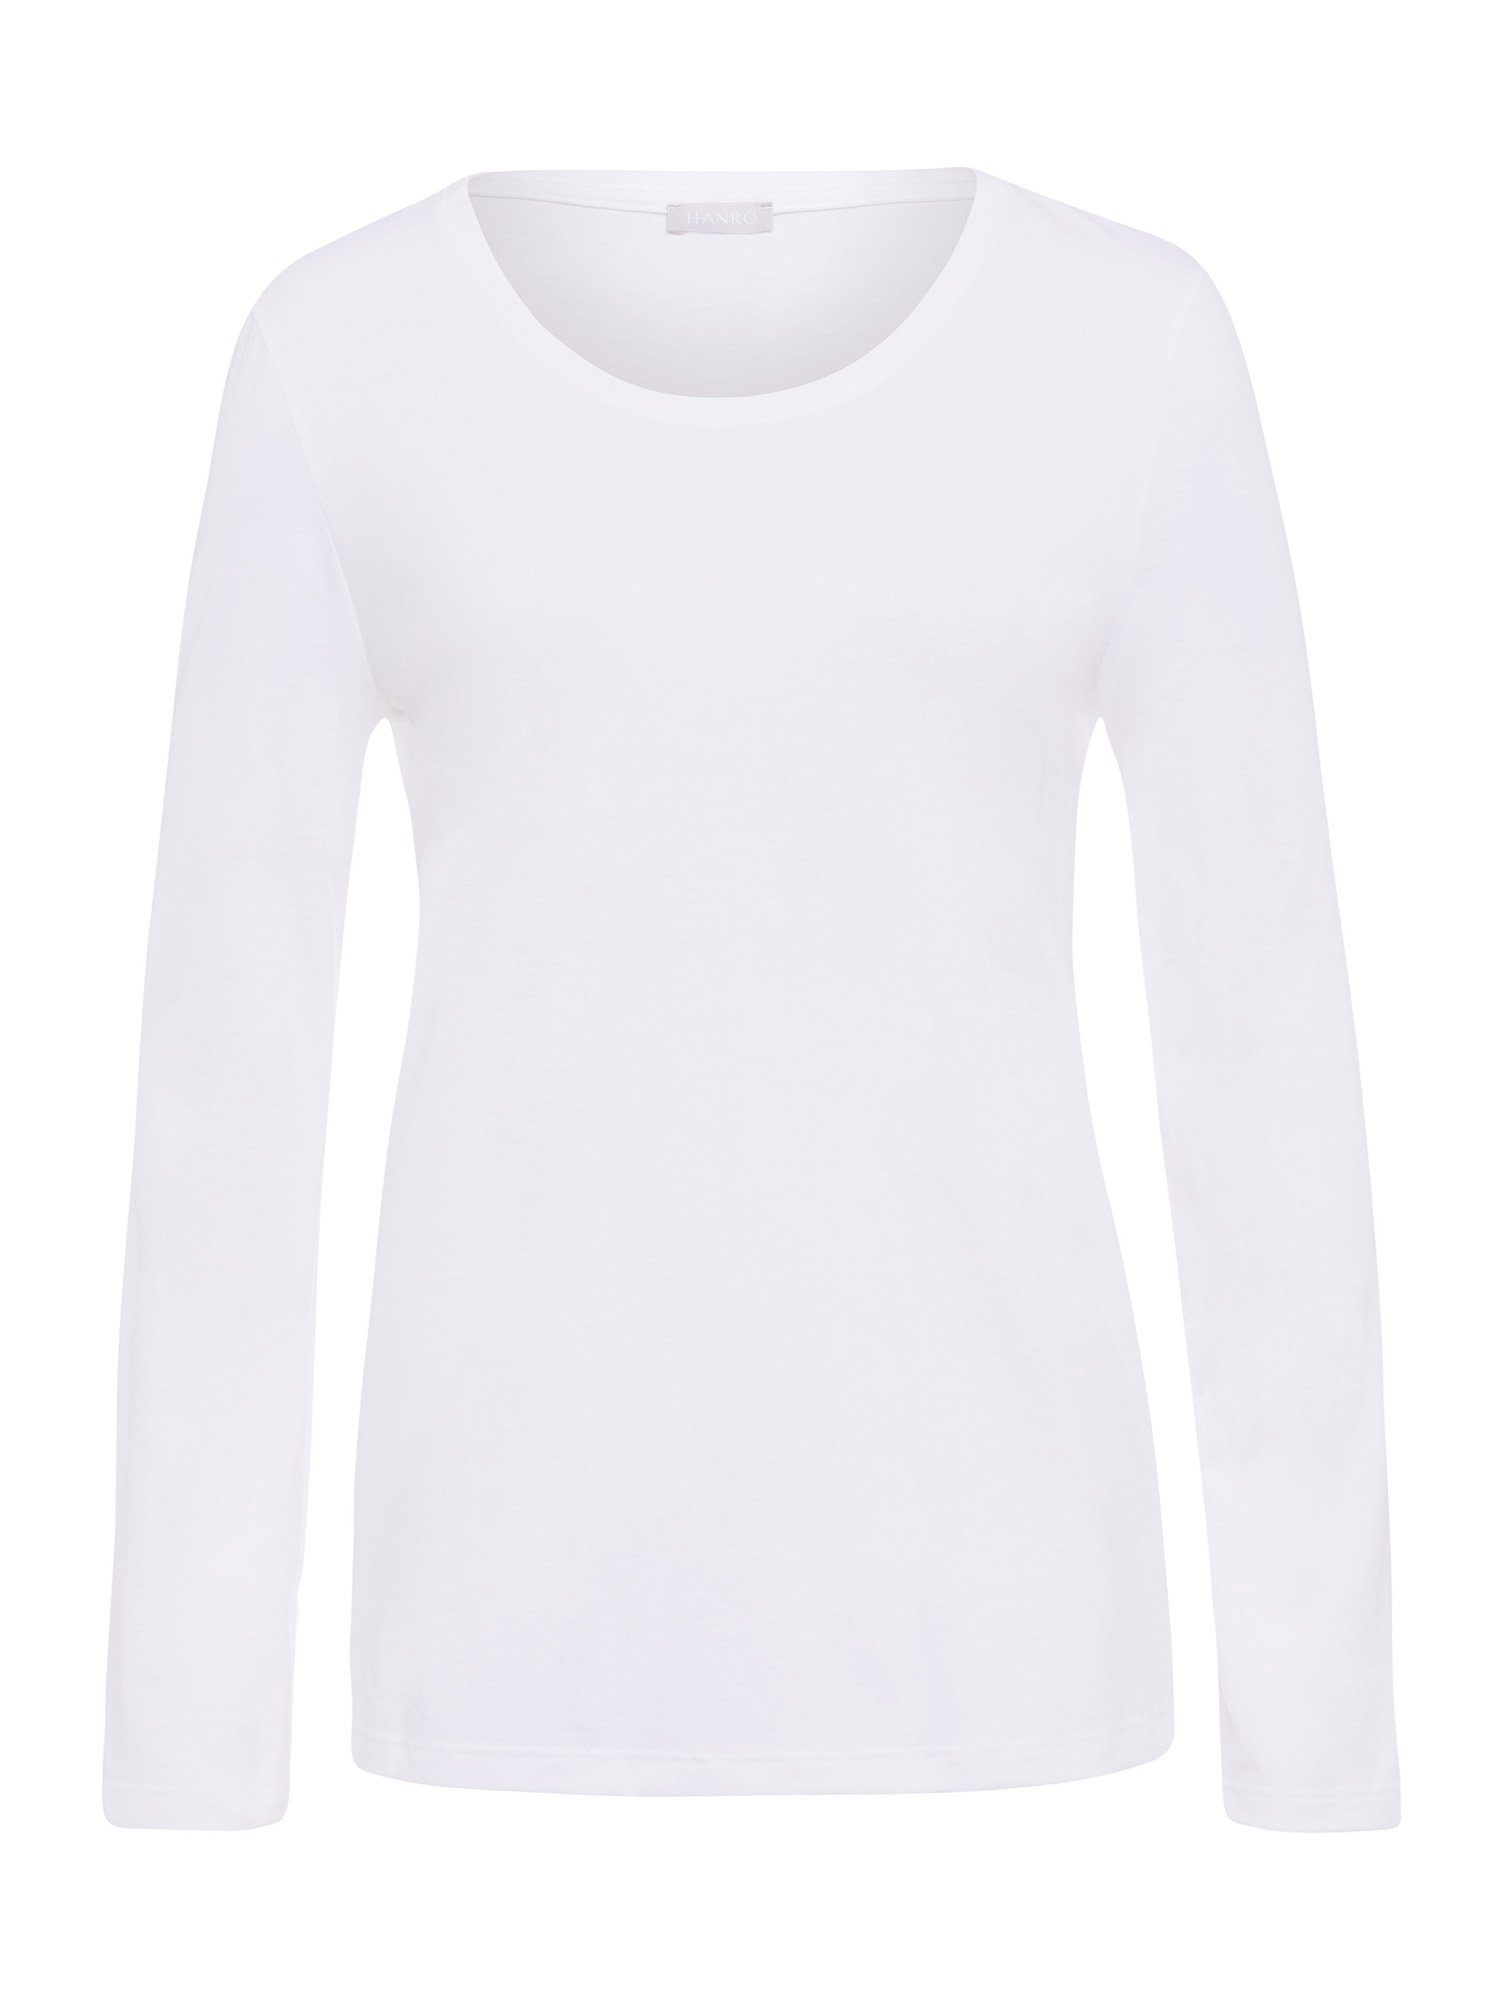 Hanro Pyjamaoberteil Sleep & langarm unterhemd shirt Lounge white